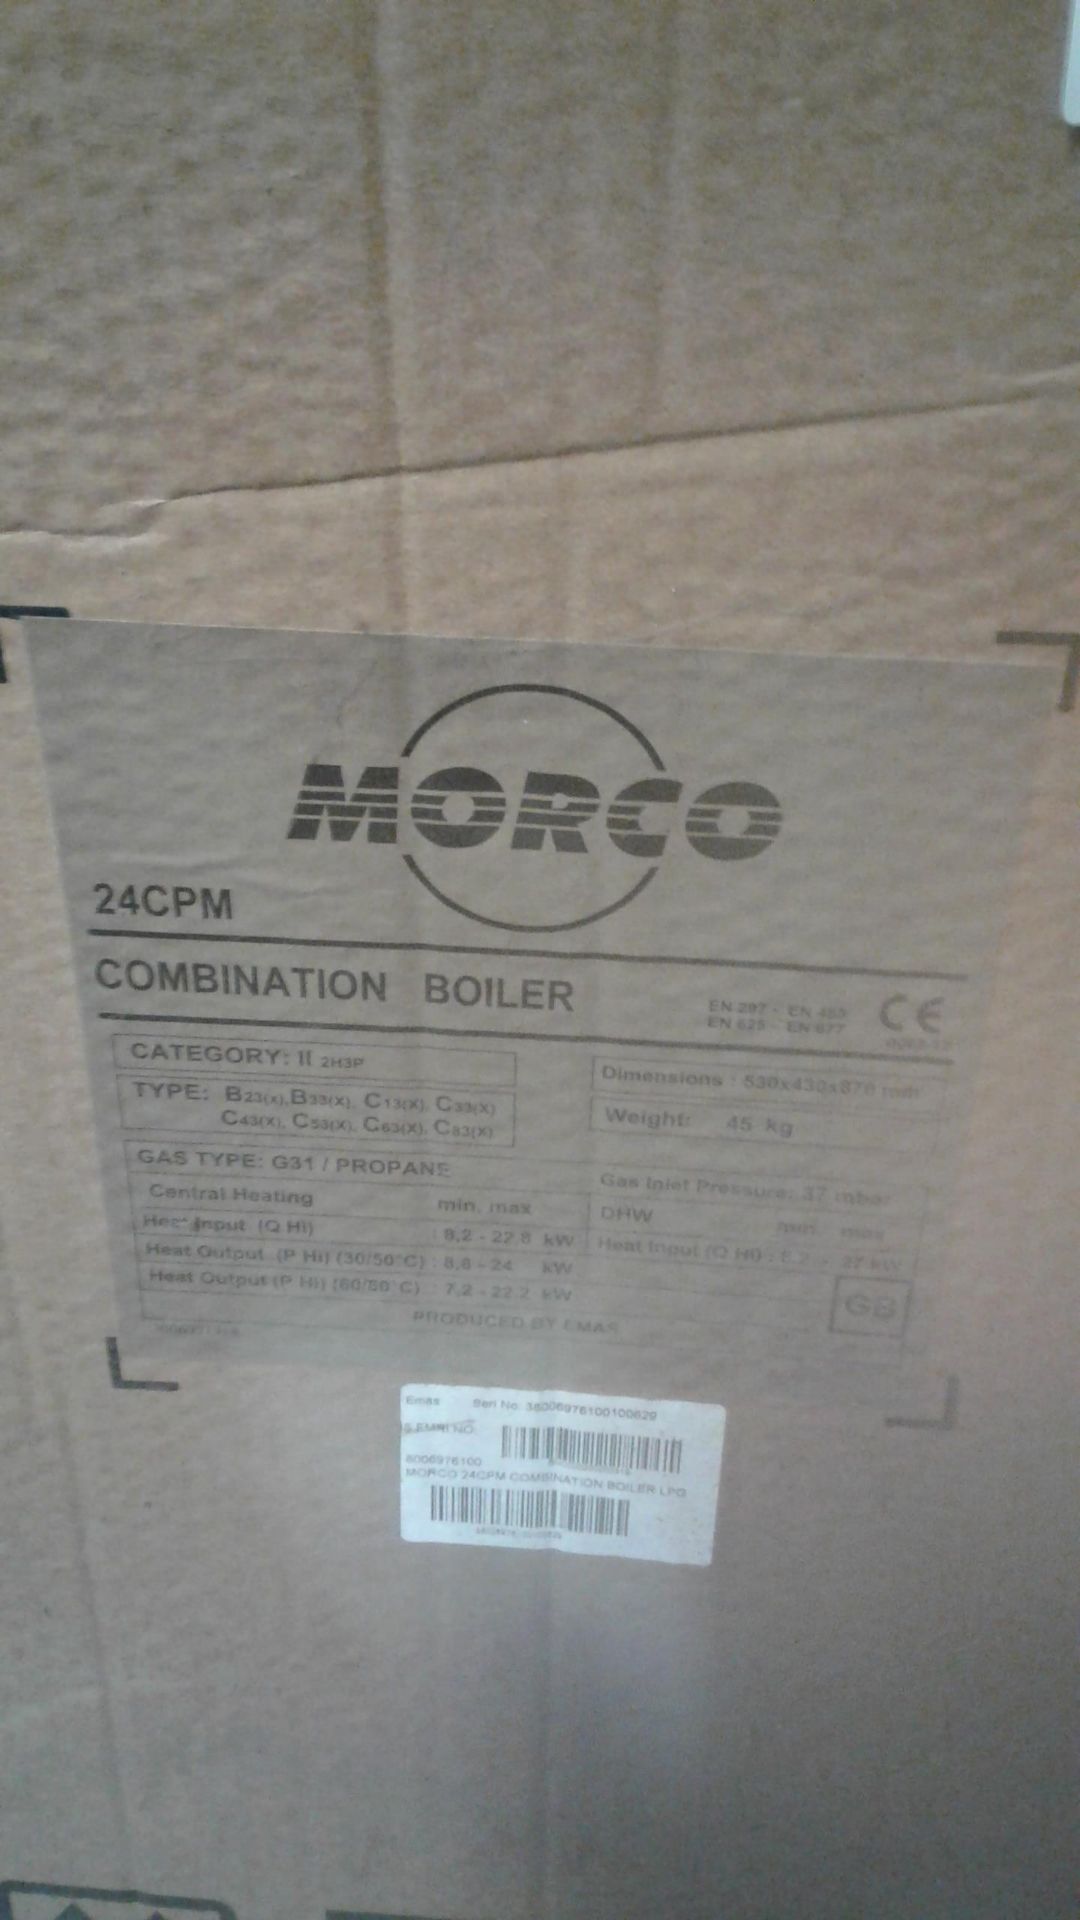 2 No Morco Combination boilers - propane - Image 2 of 2